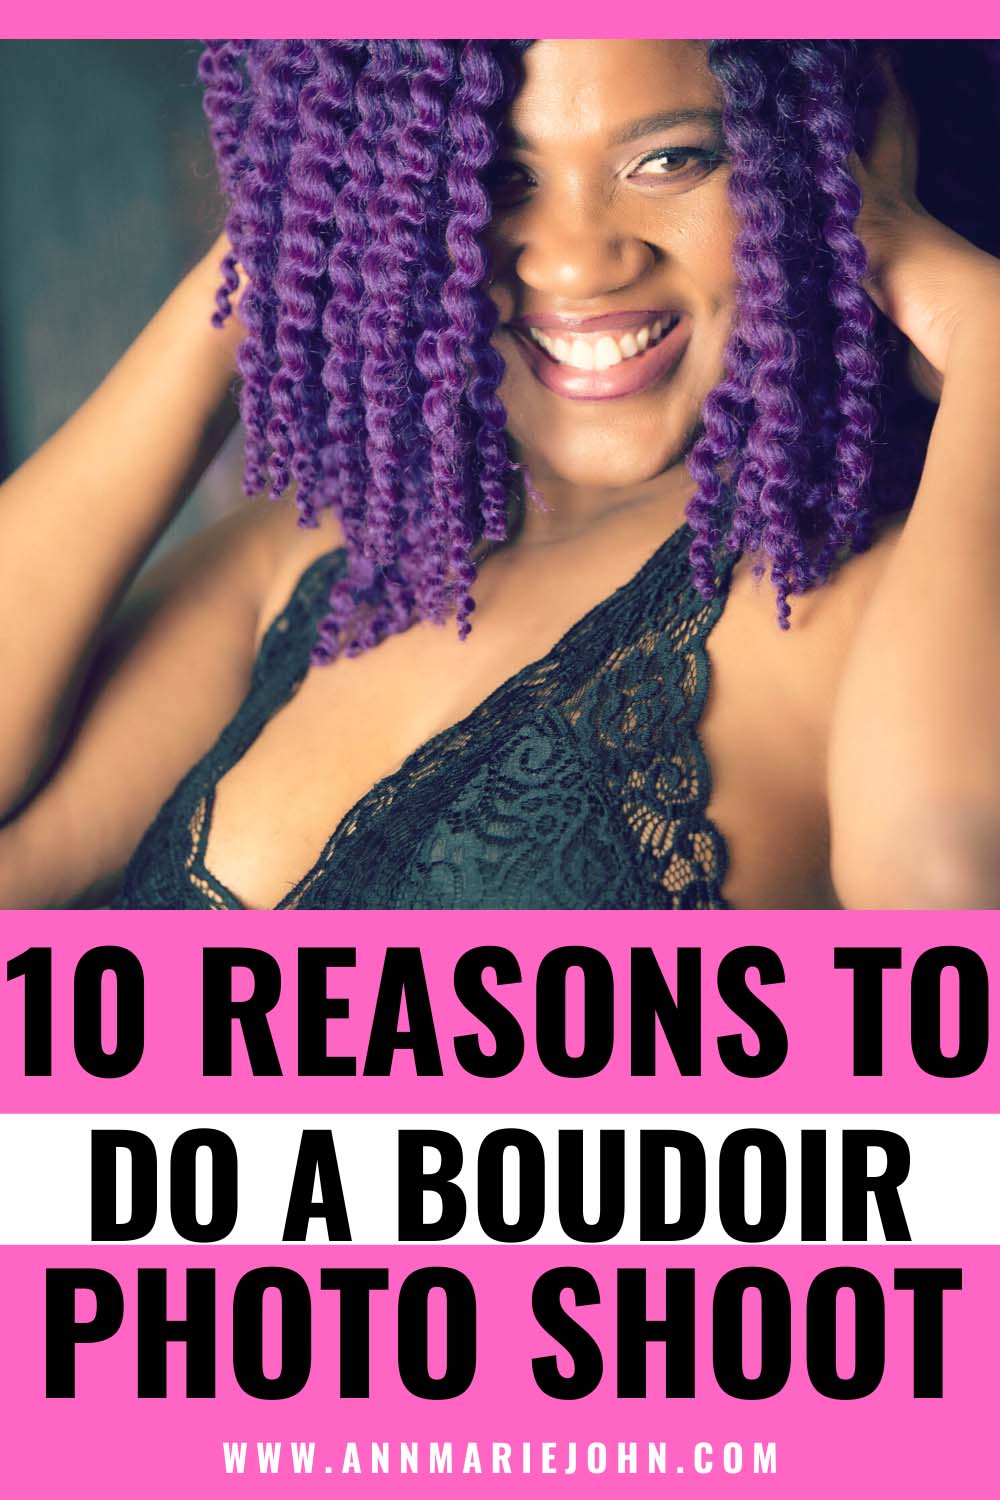 Reasons to Do A Boudoir Photo Shoot